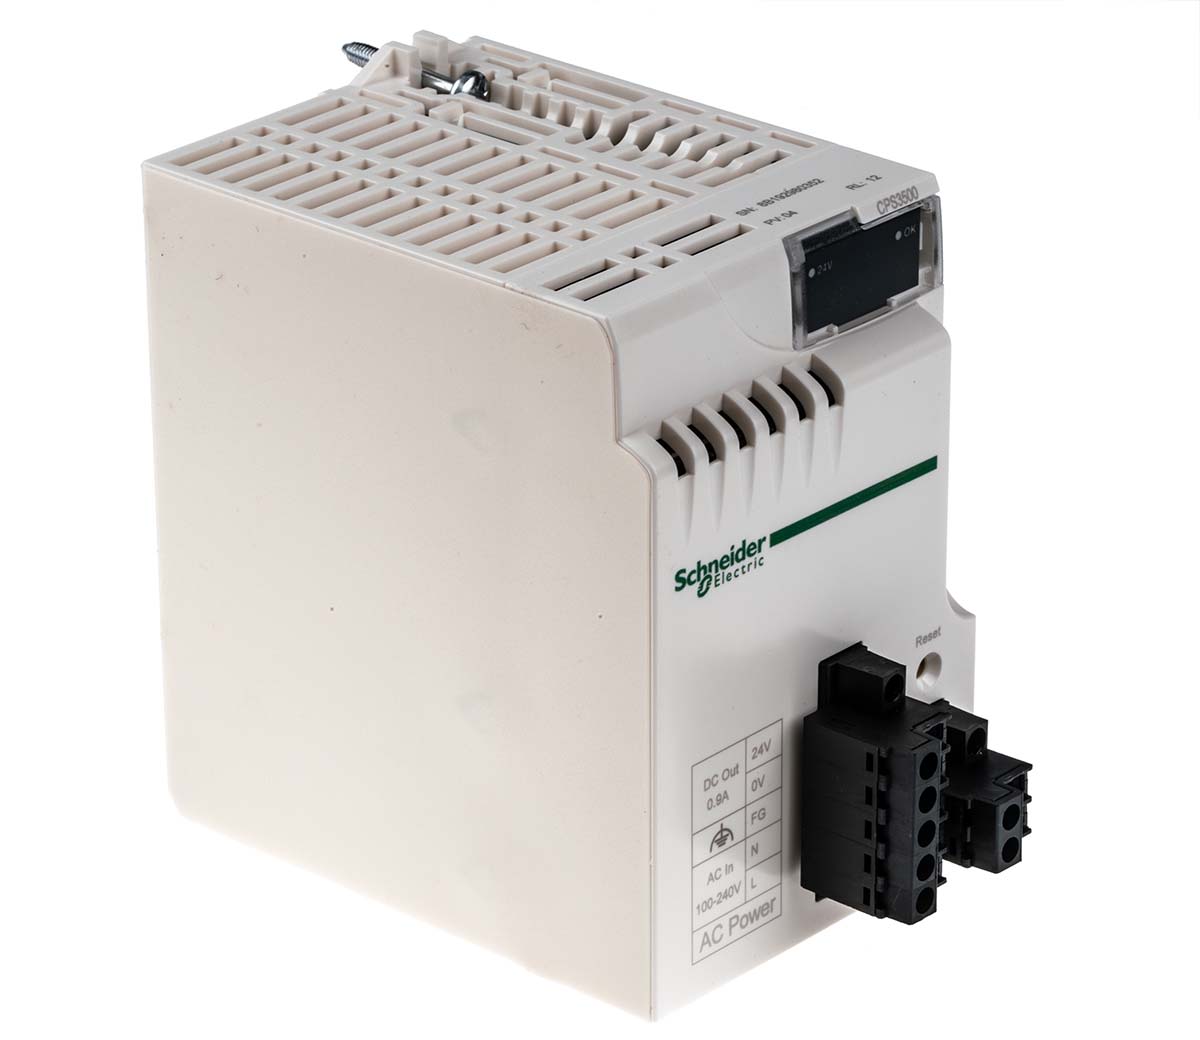 Schneider Electric PLC Power Supply for use with Modicon M340, Modicon M340